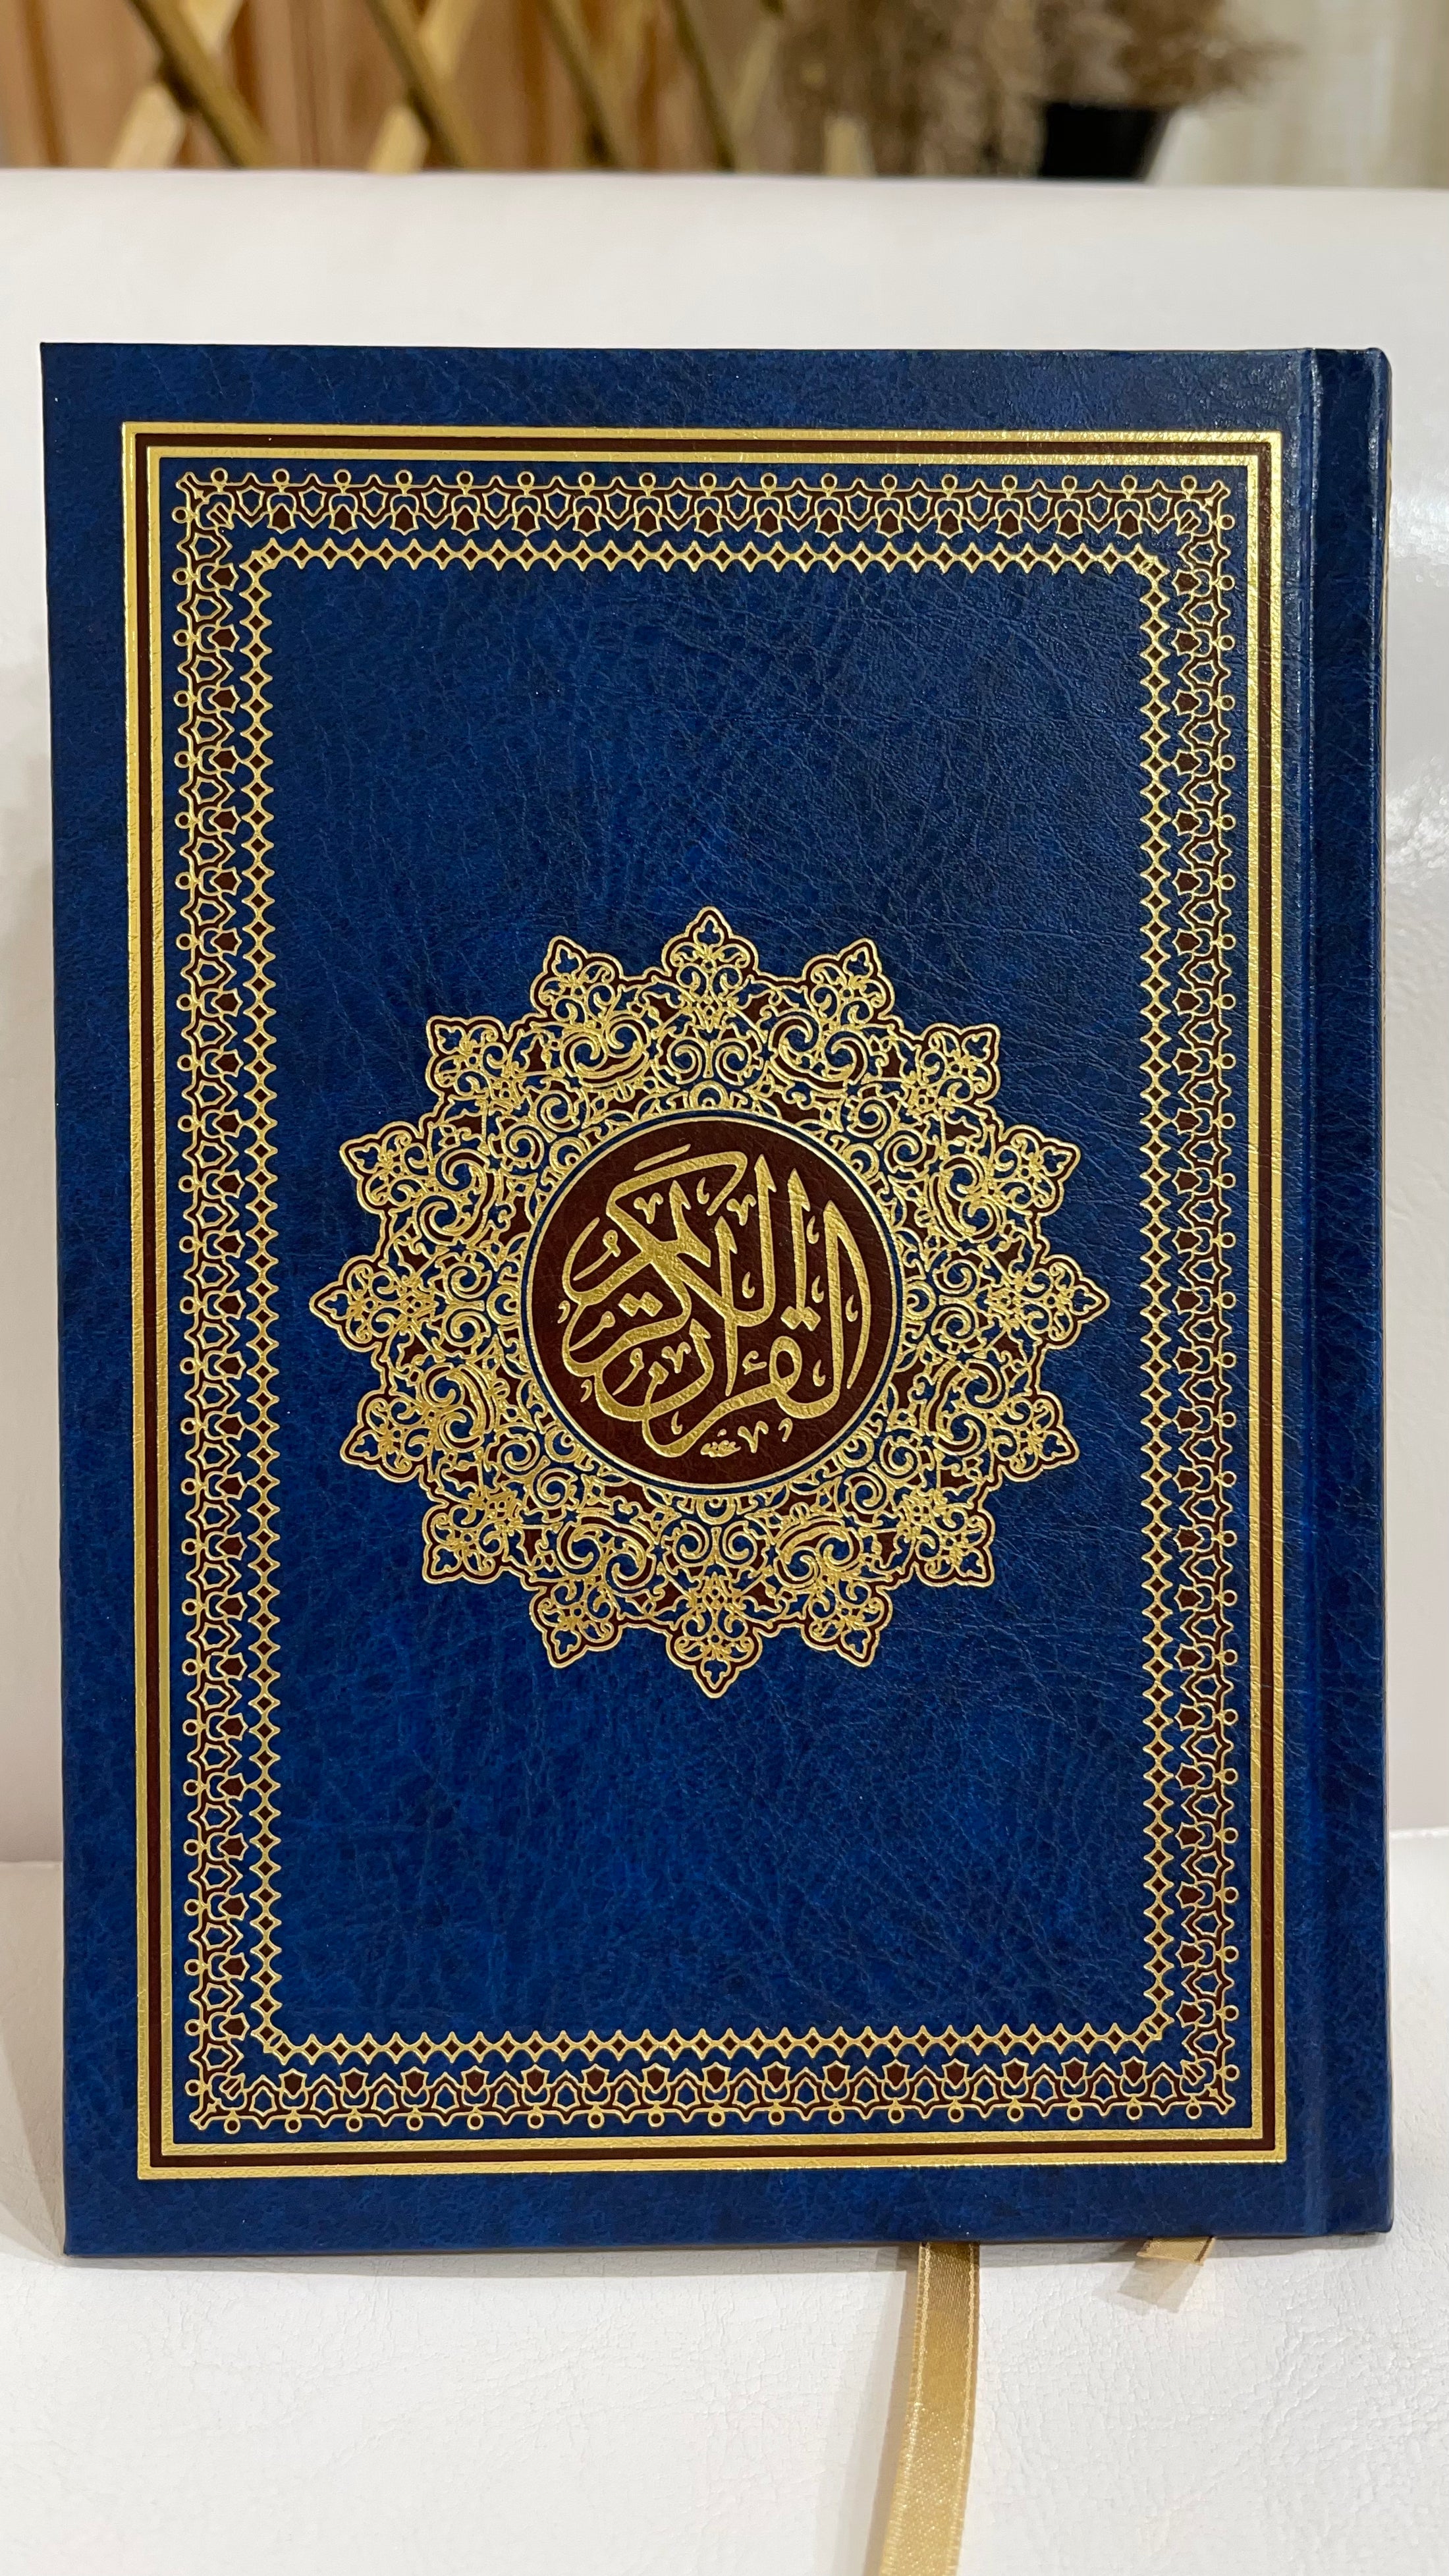 Corano in arabo hafs- Hijab Paradise - copertina rigida - corano in arabo - libro sacro